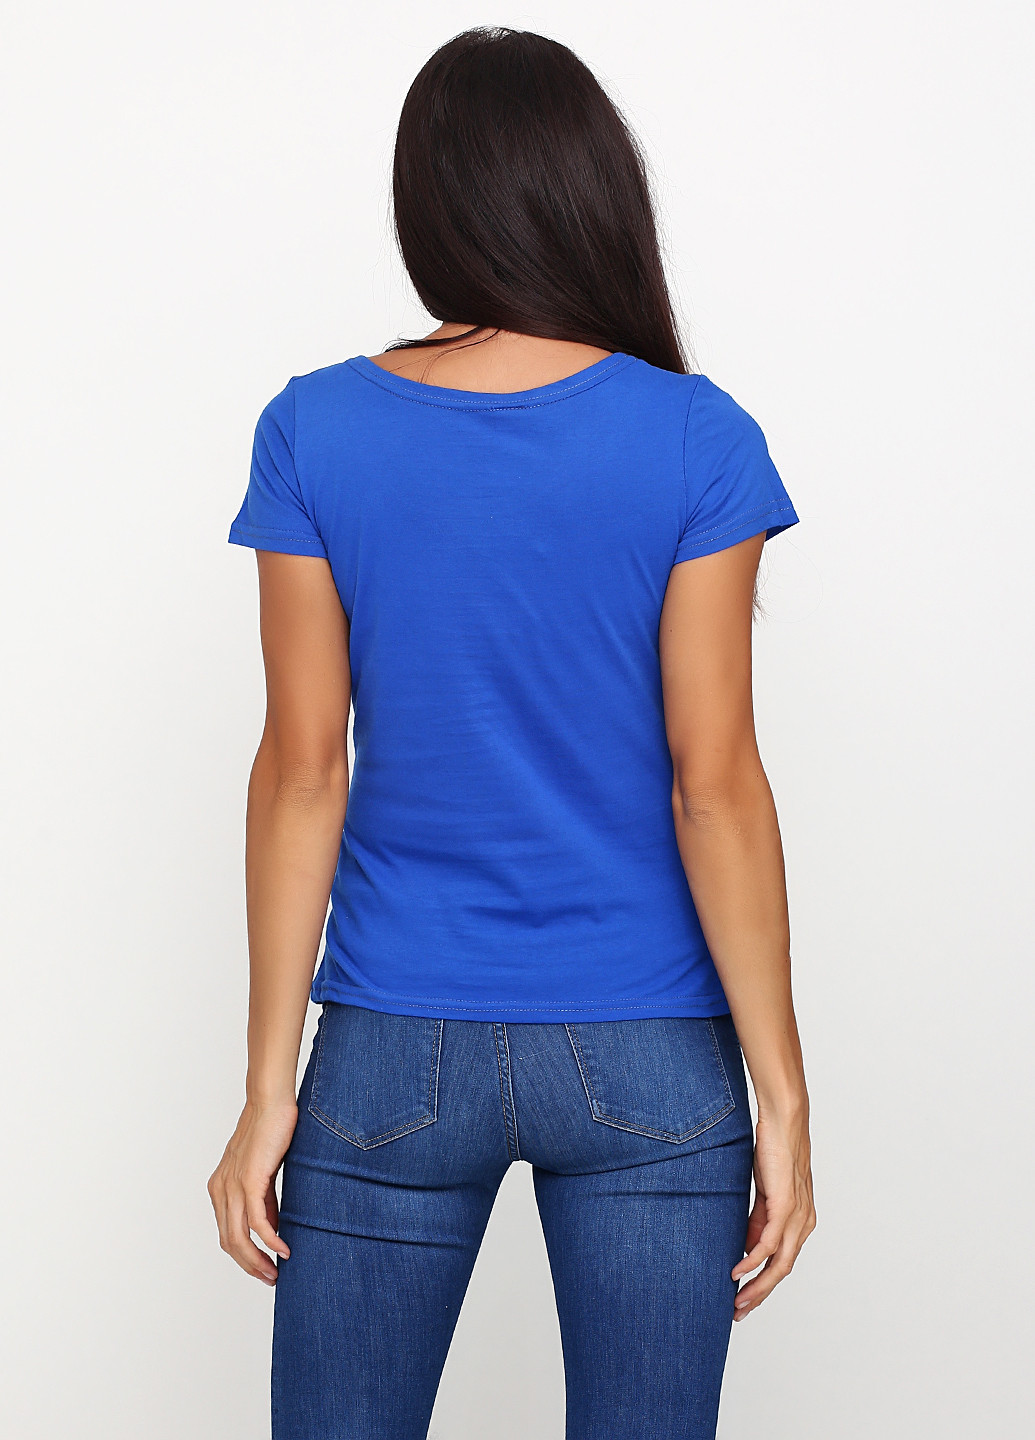 Синяя летняя футболка с коротким рукавом Трикомир